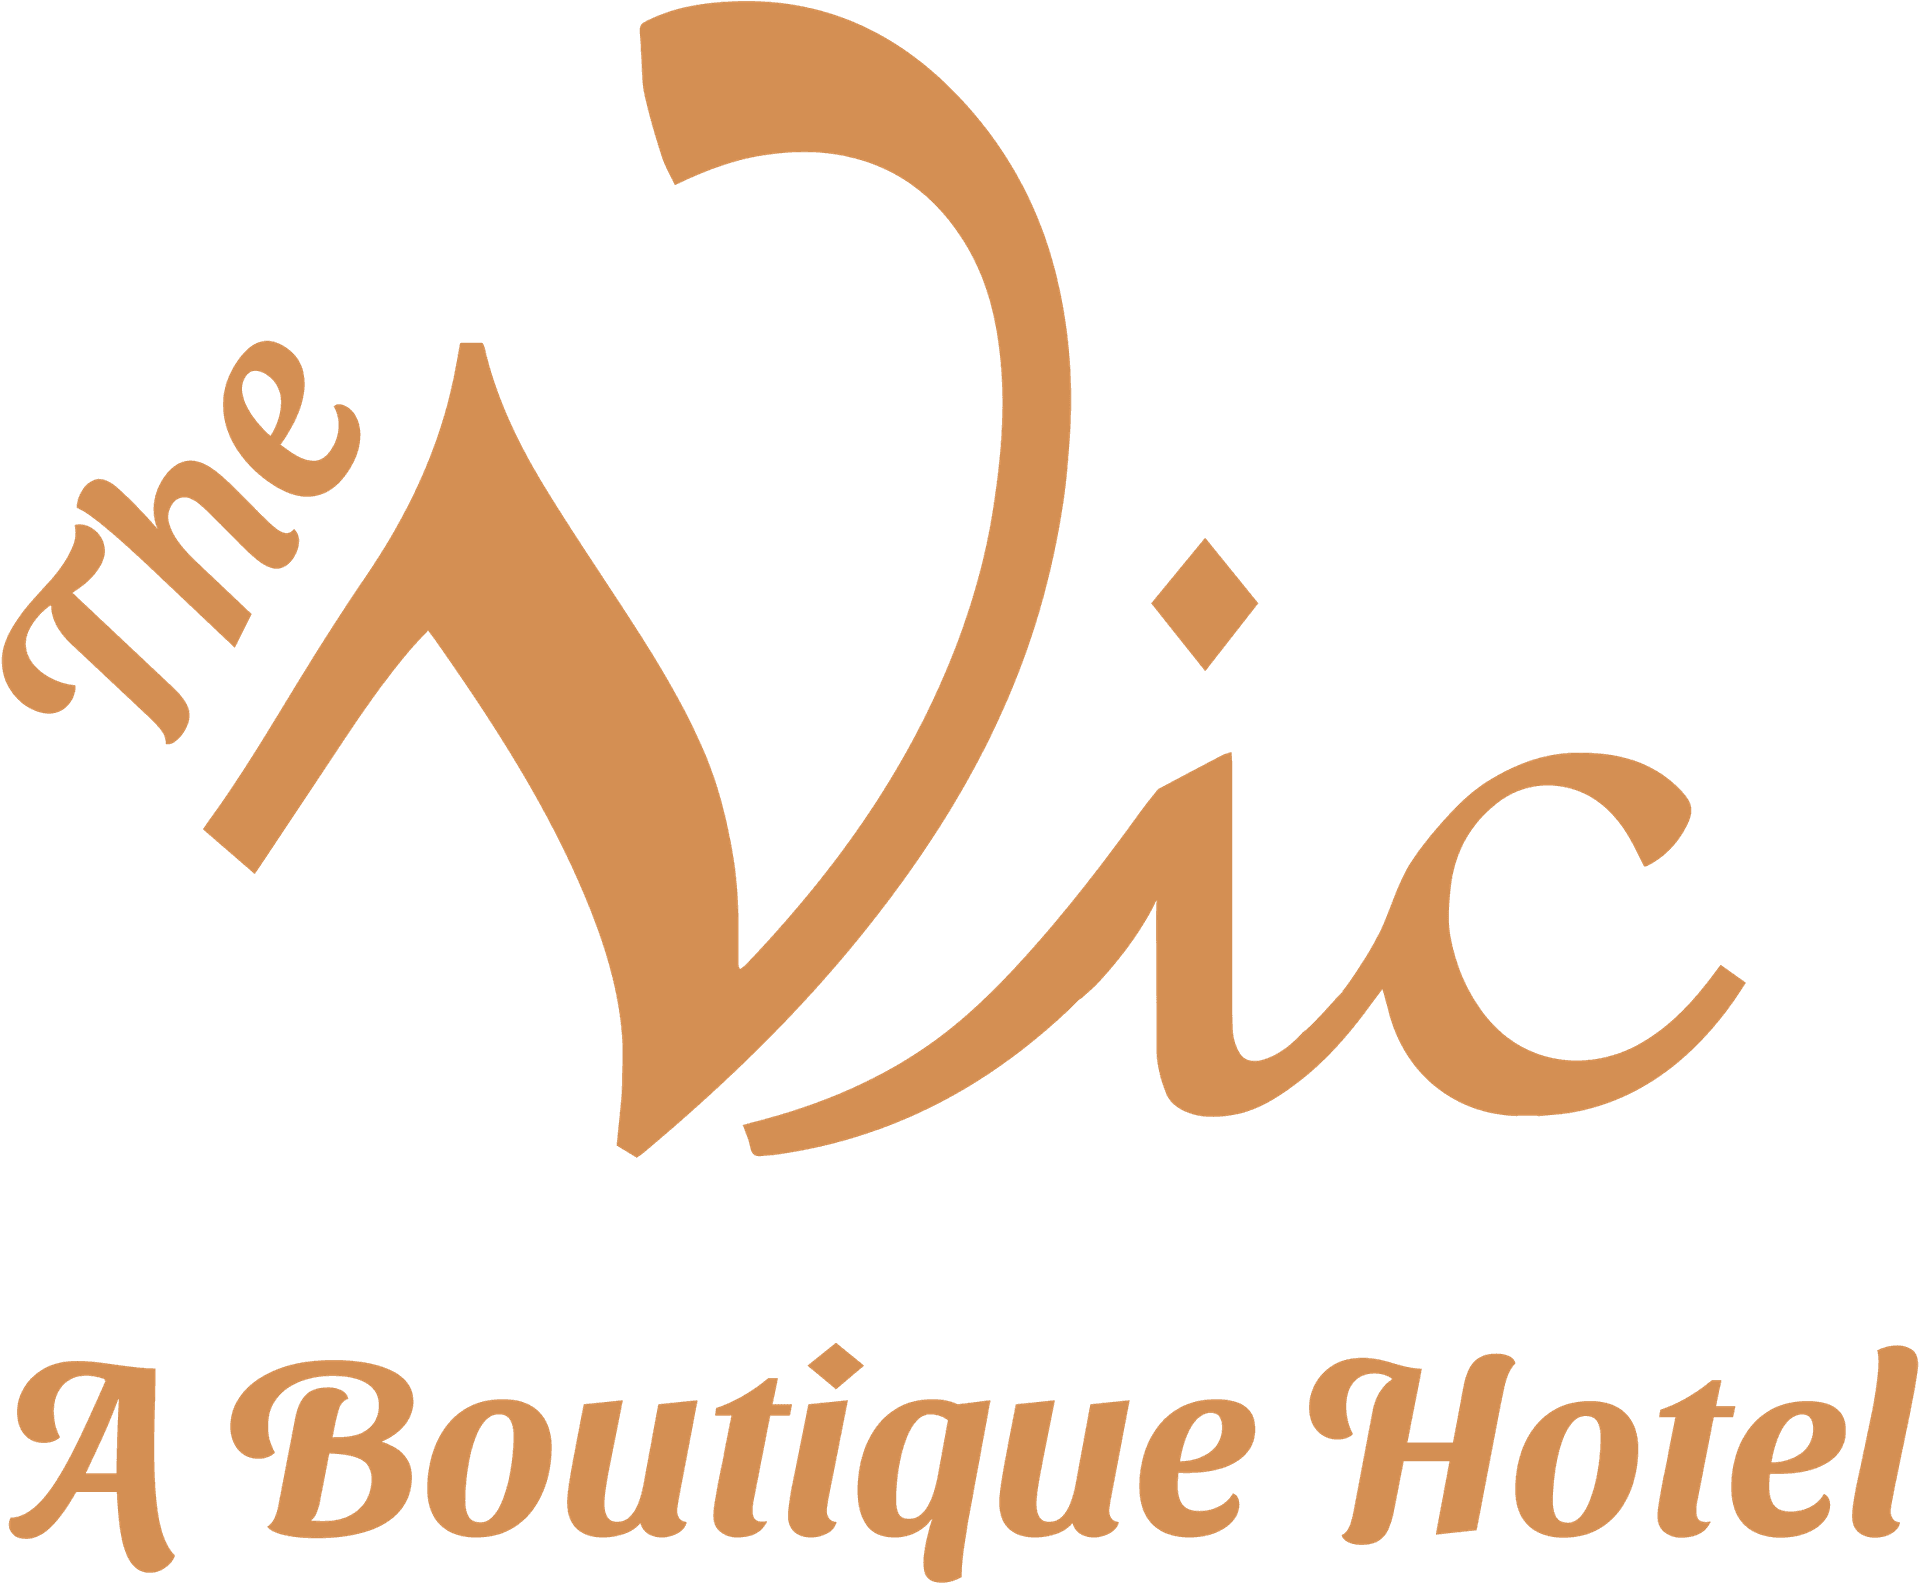 vic boutique hotel logo